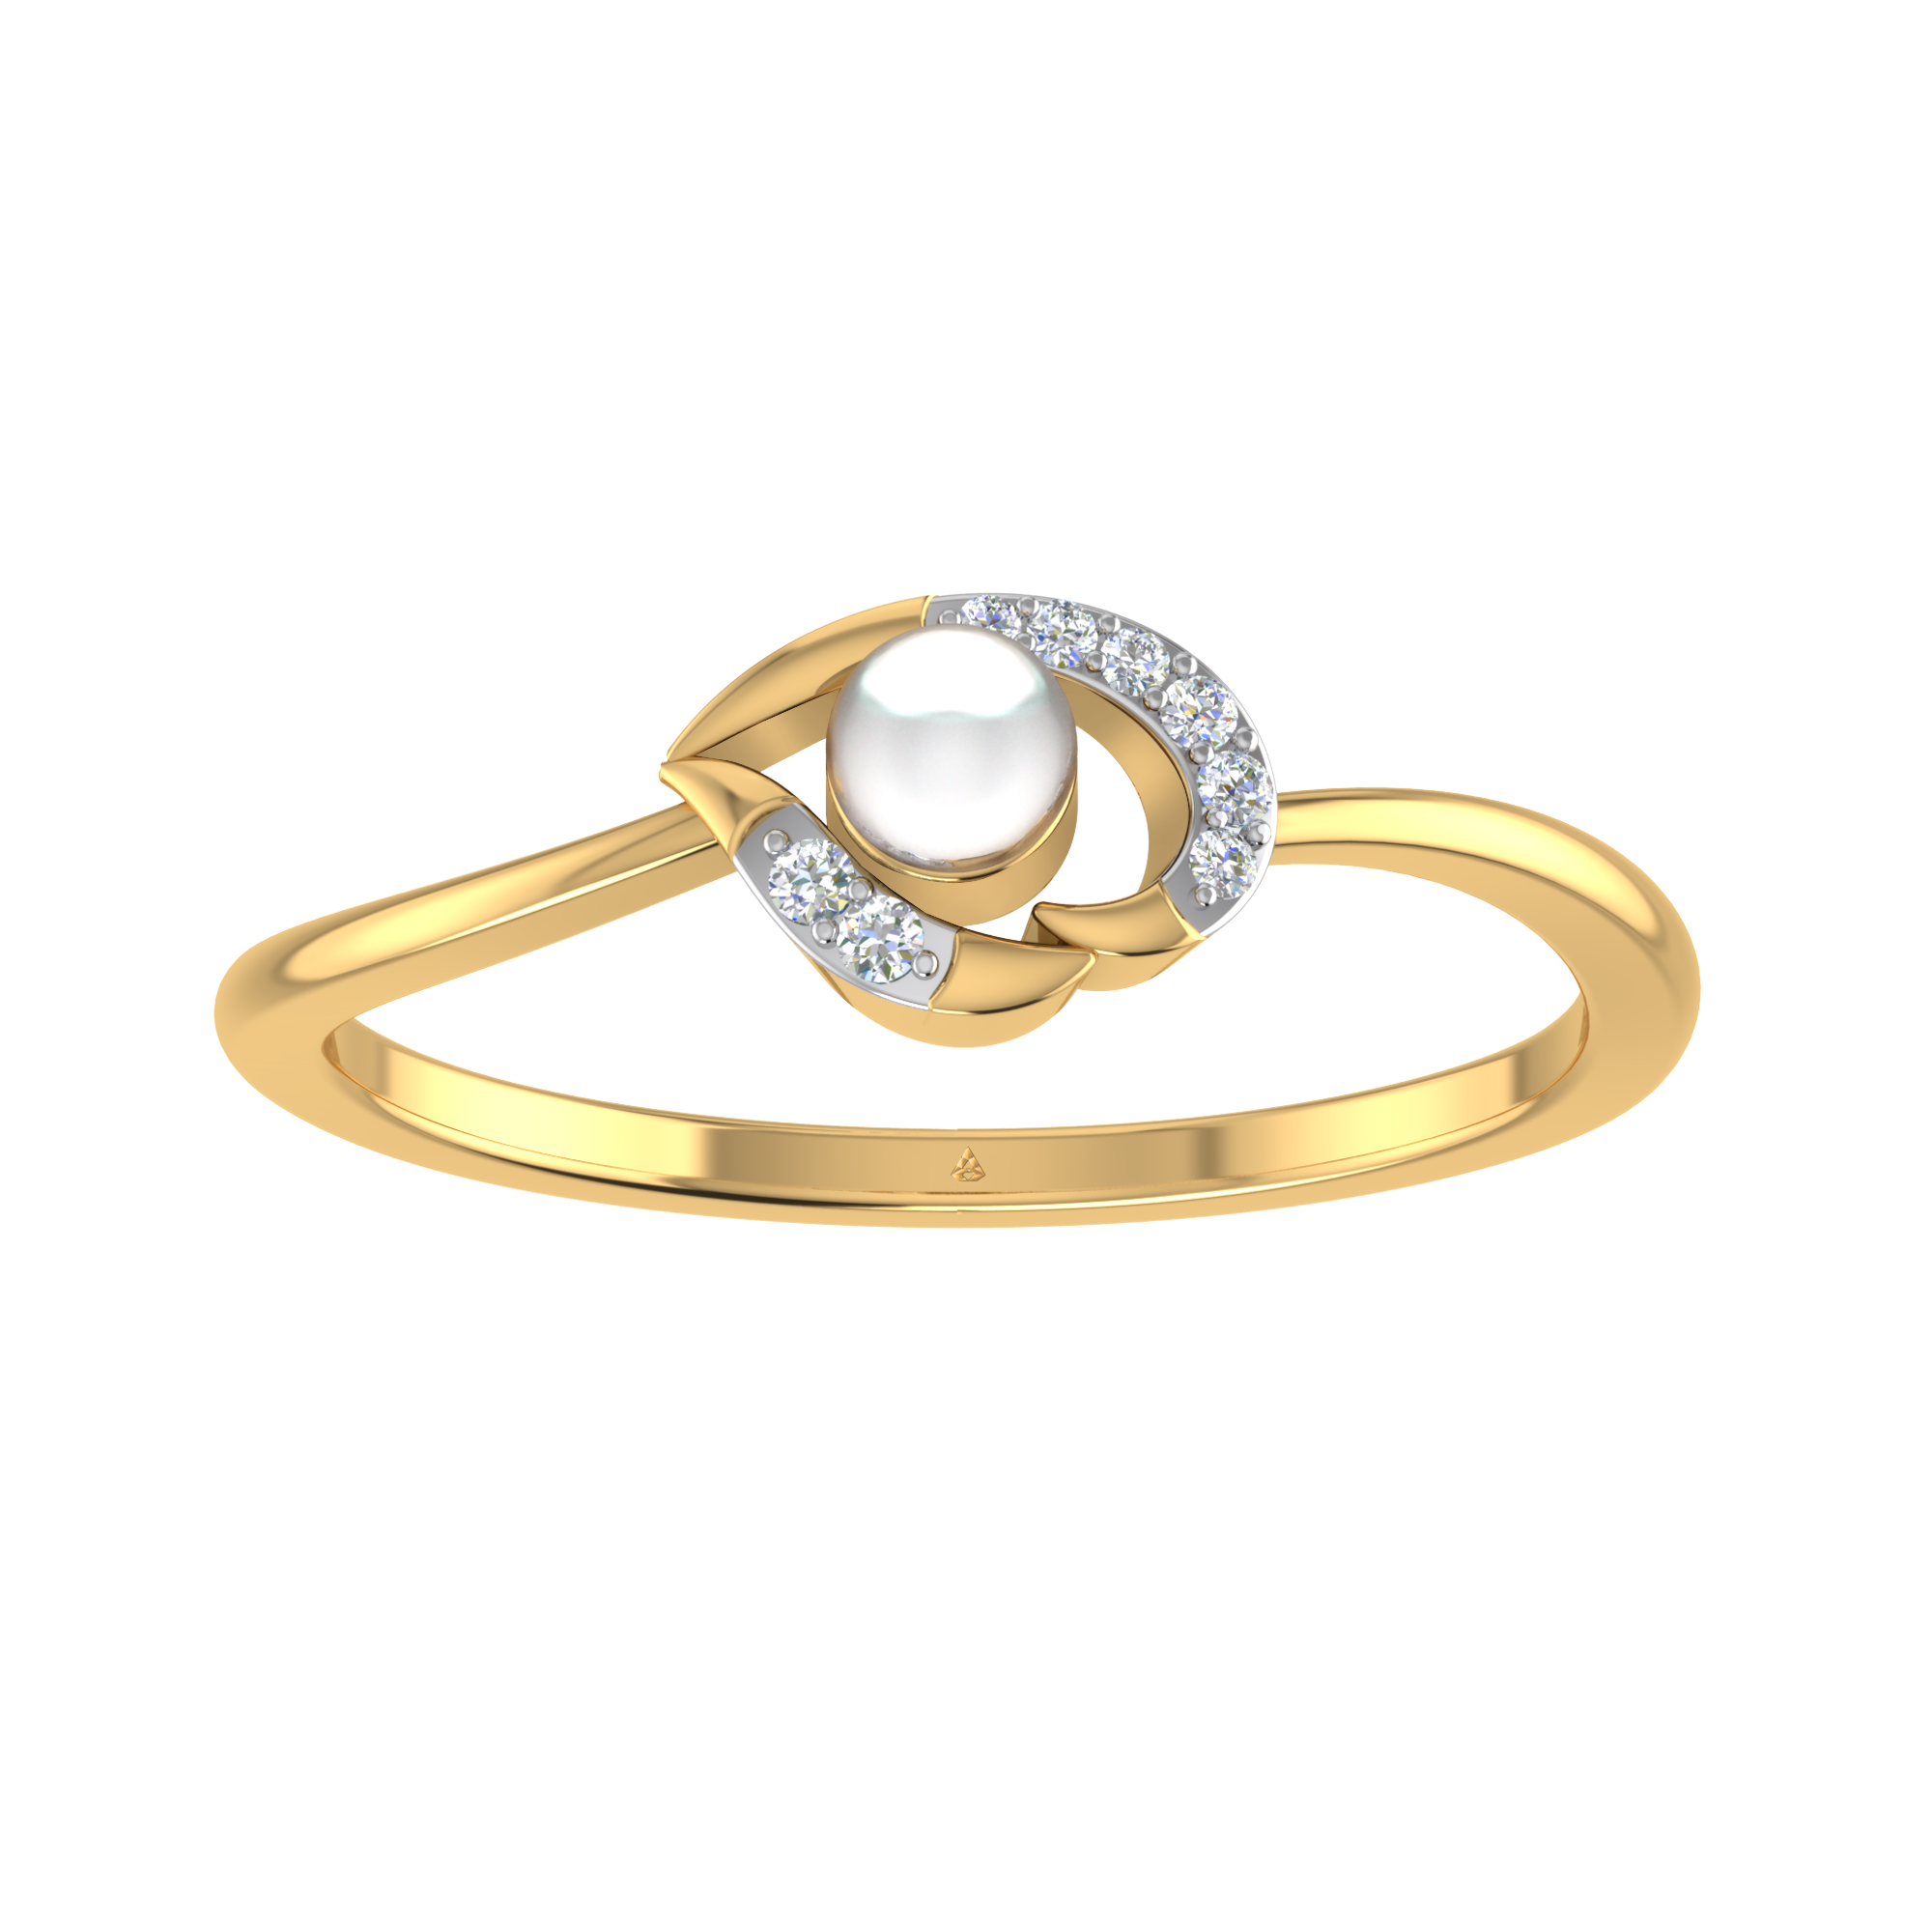 Women Freshwater Pearl Ring Sterling Silver Rings Elegant Wedding Jewelry  1Pcs | eBay